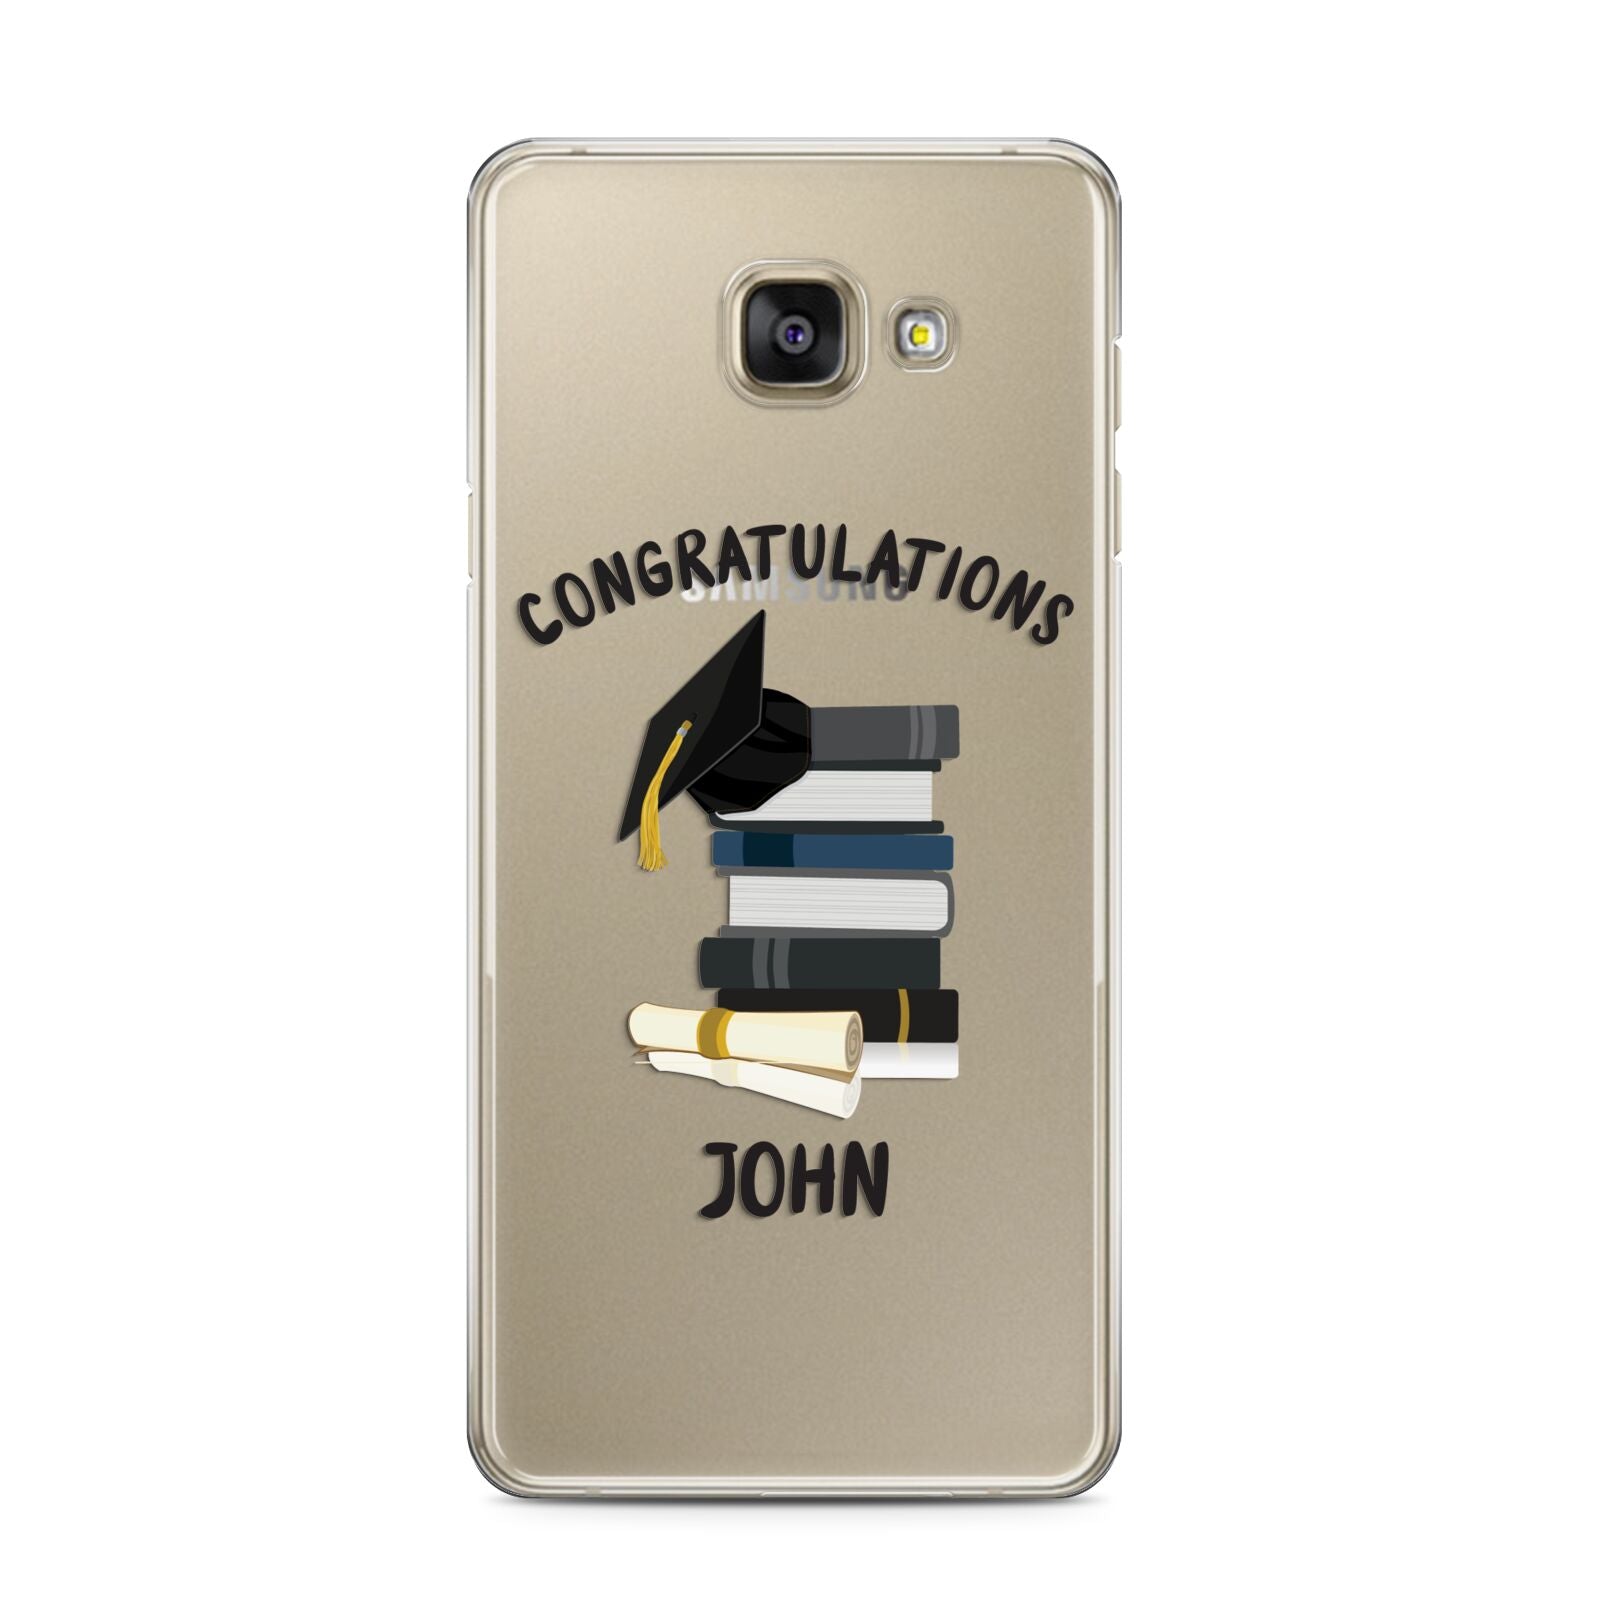 Congratulations Graduate Samsung Galaxy A3 2016 Case on gold phone